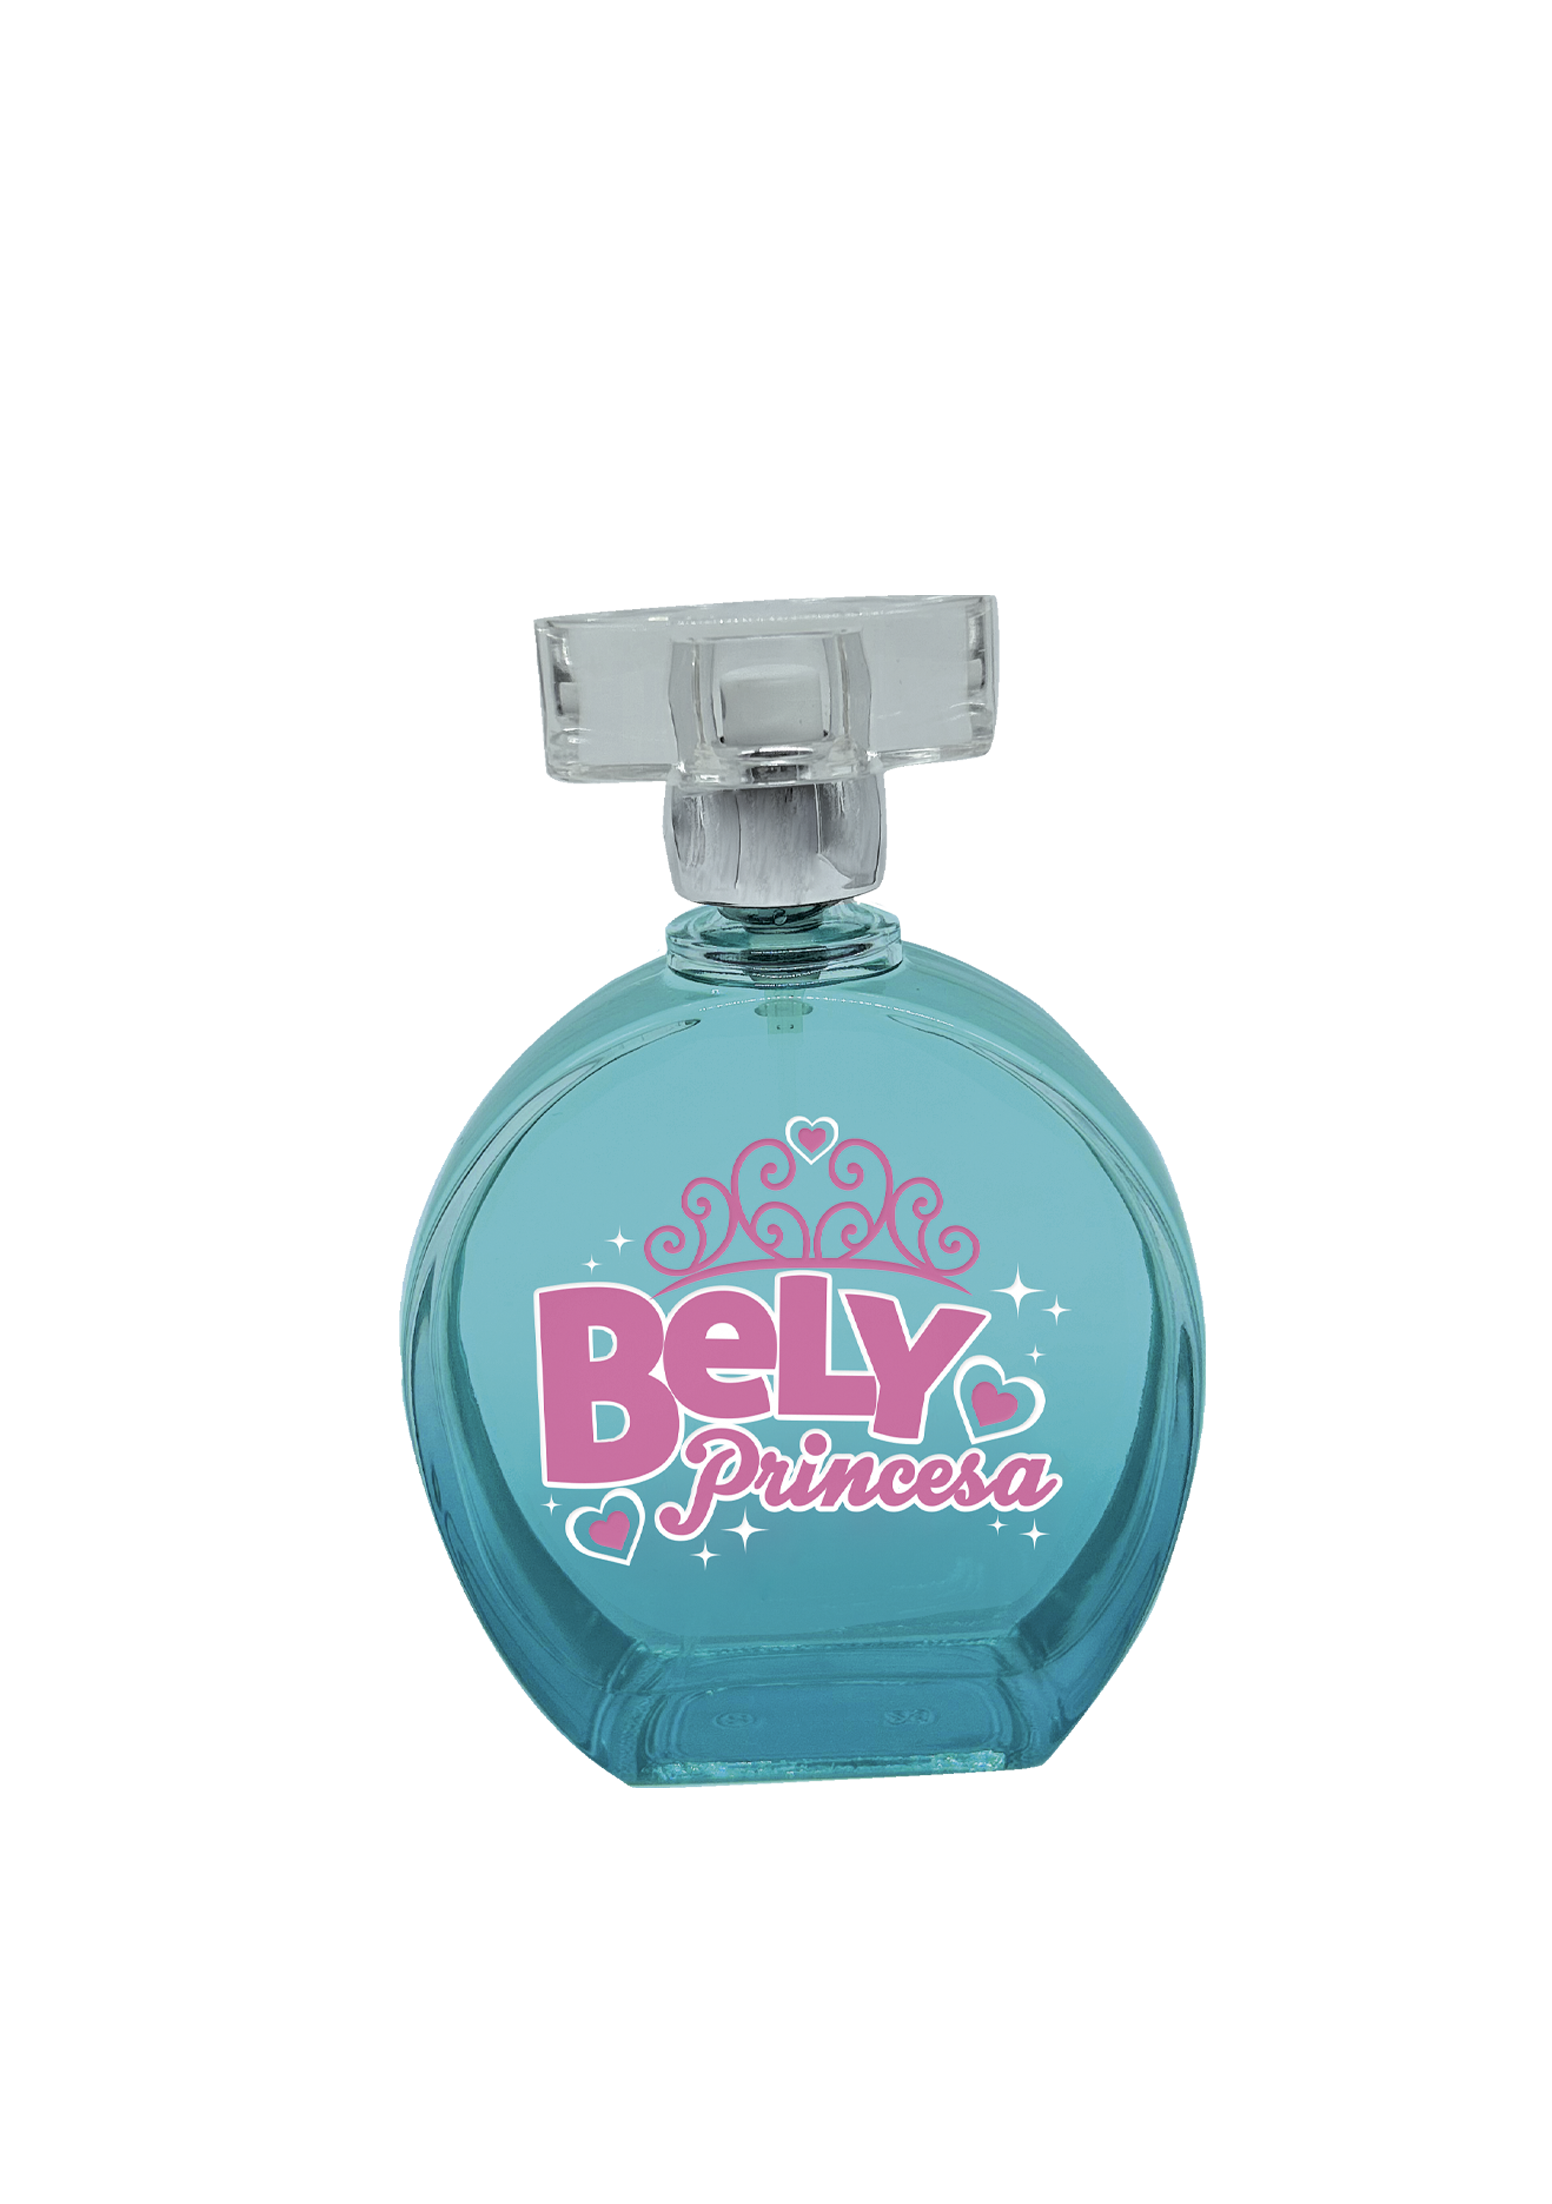 Bely perfume